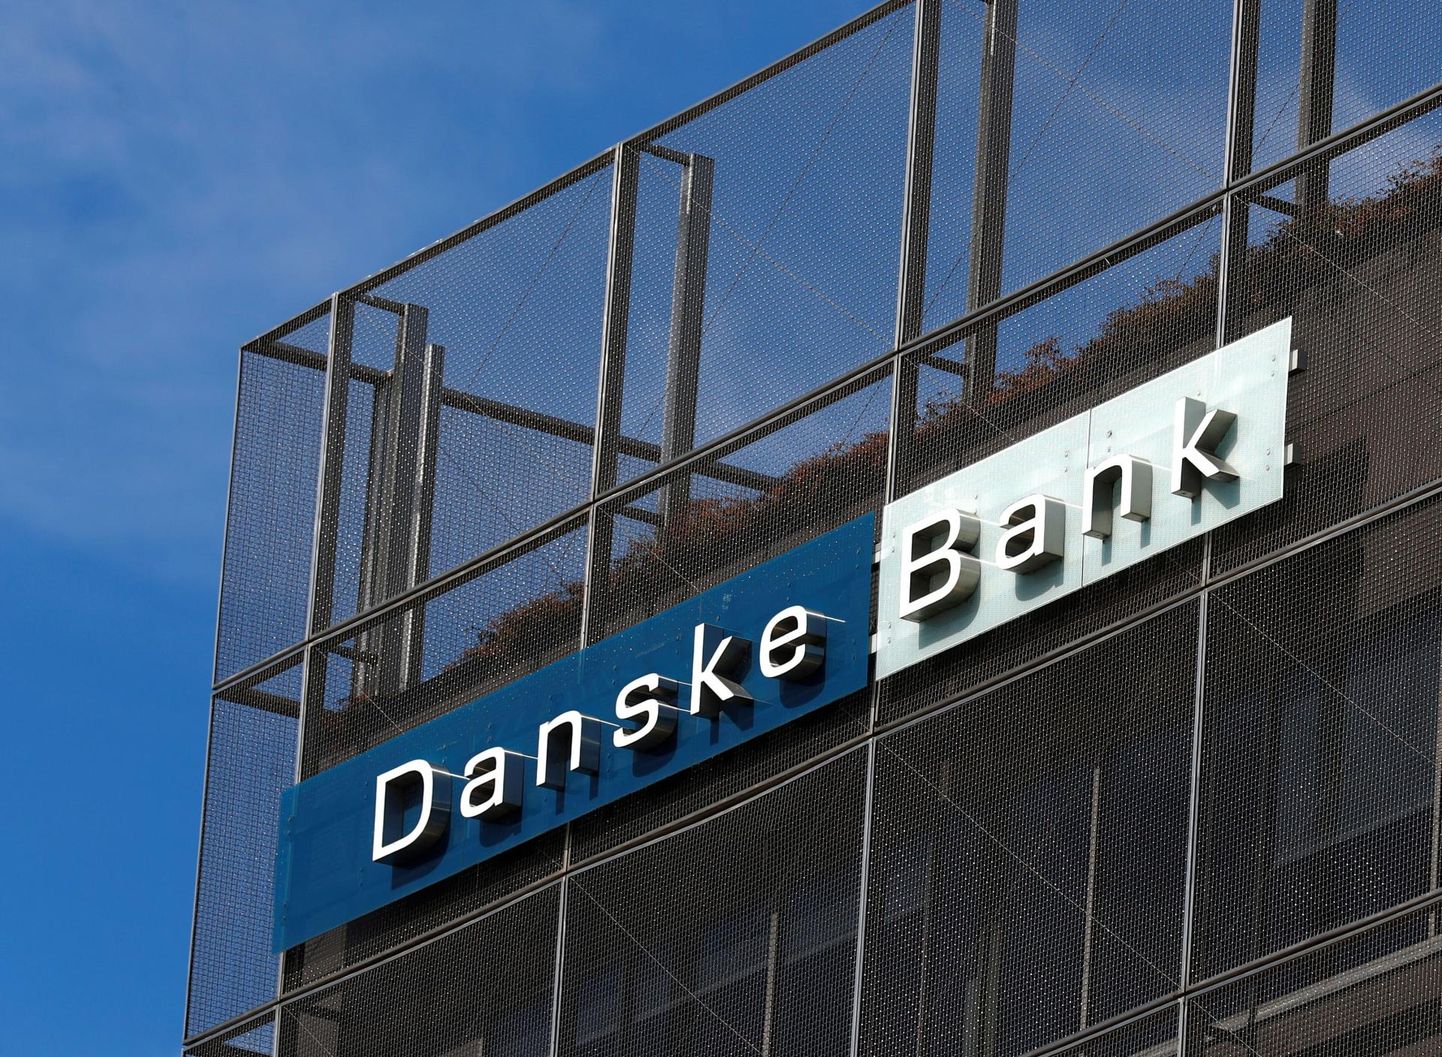 Логотип Danske Bank. Иллюстративное фото.